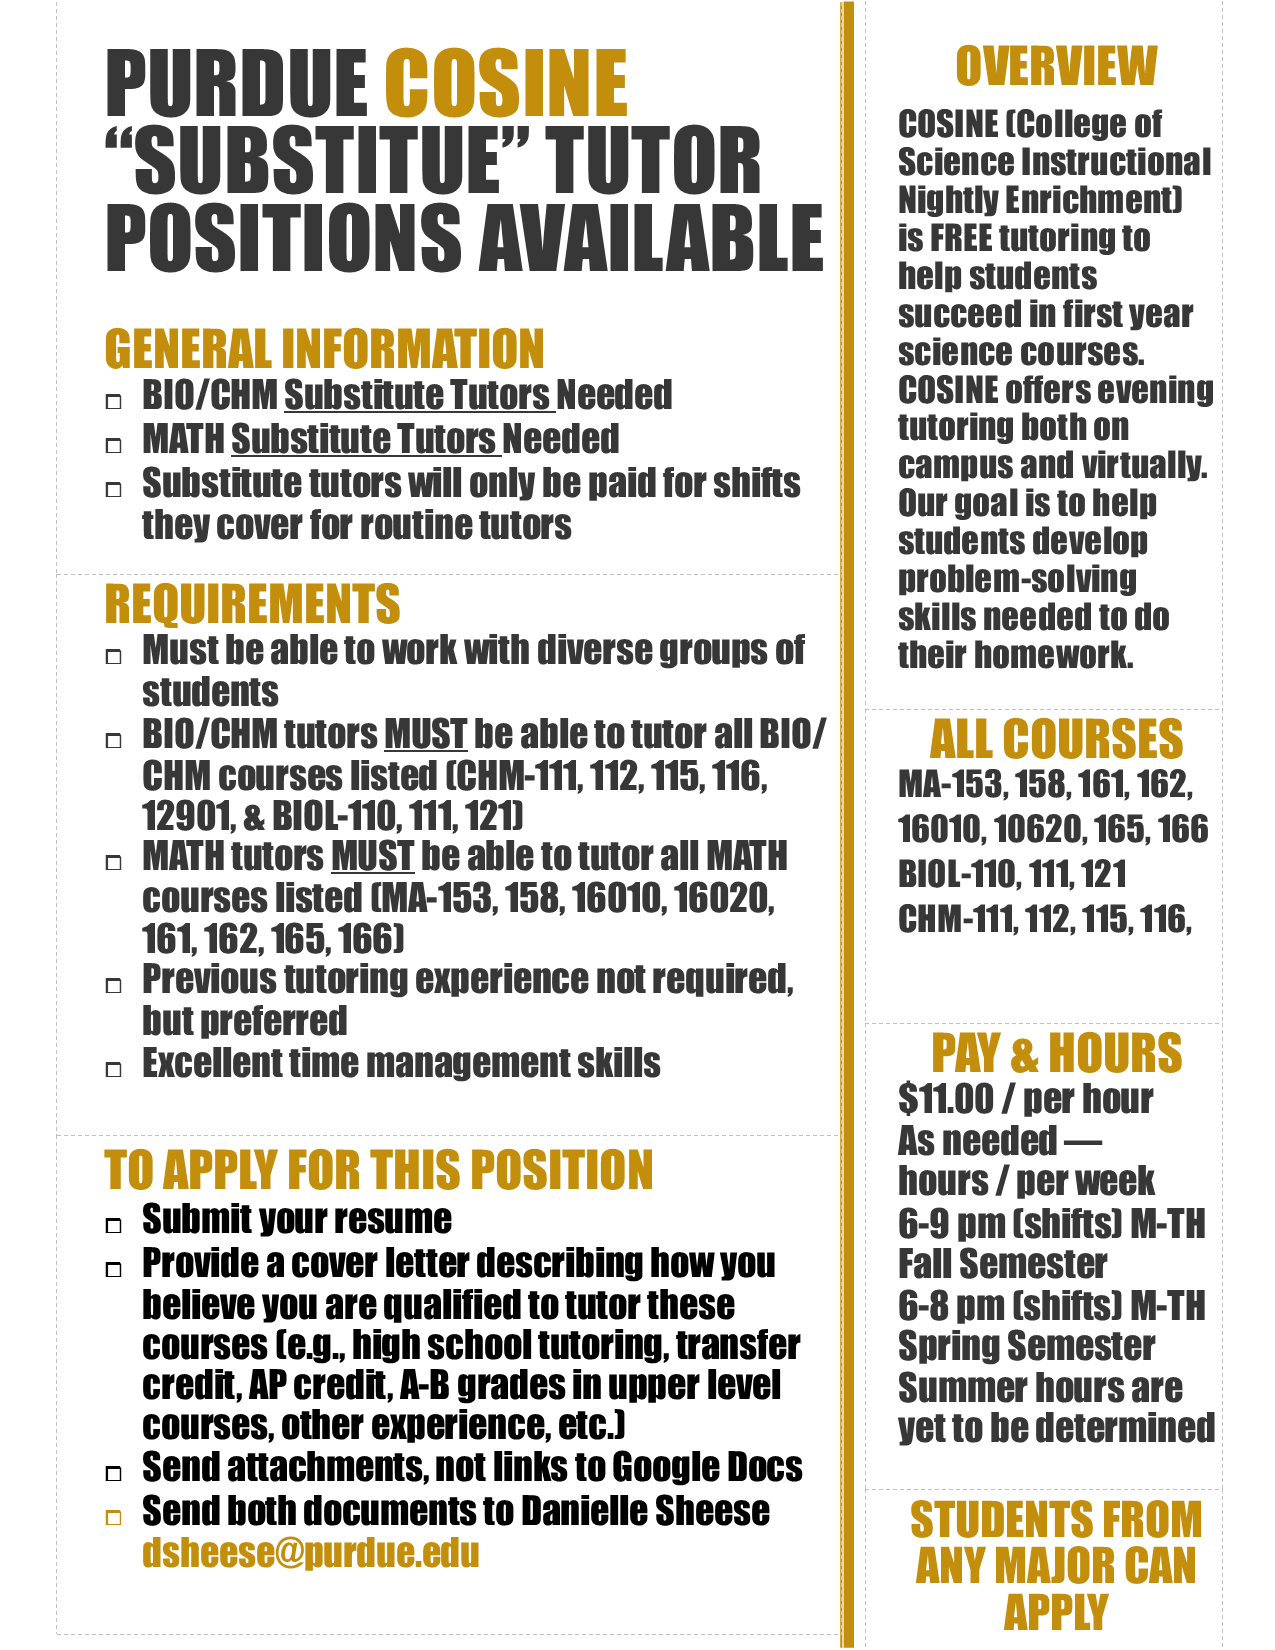 Purdue COSINE substitute tutor positions available